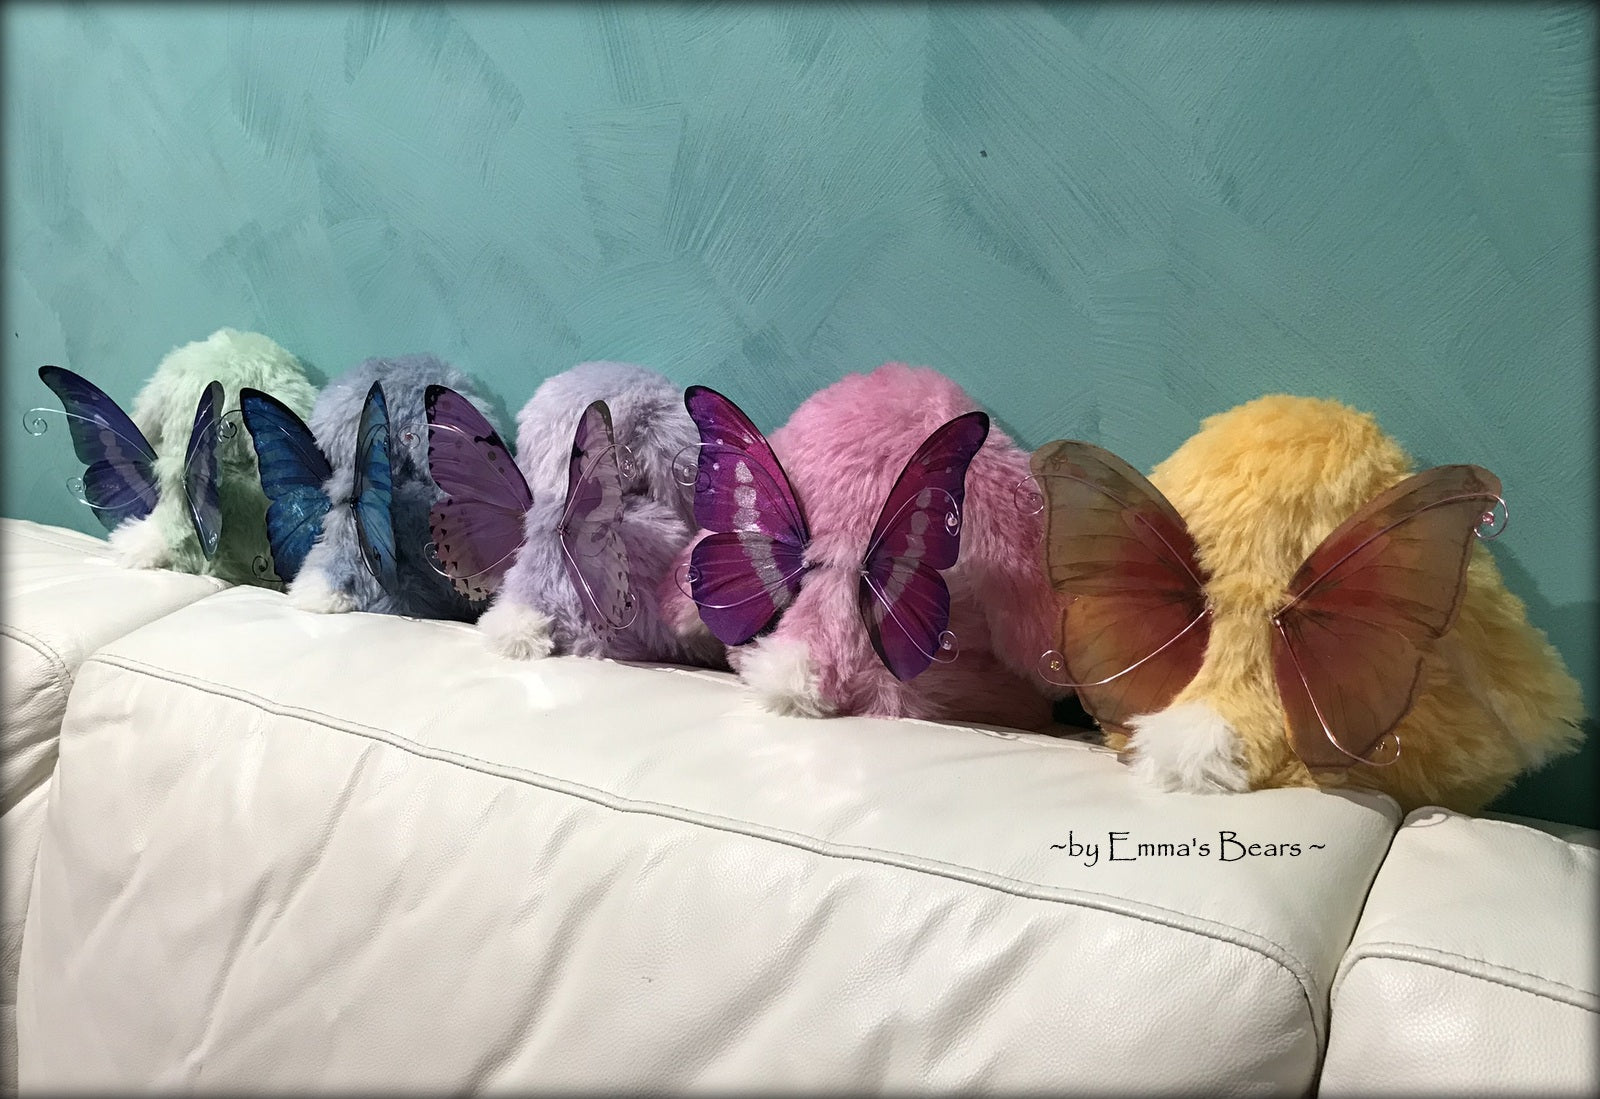 Tulip - 9" Hand dyed alpaca artist Easter Bunny by Emma's Bears - OOAK